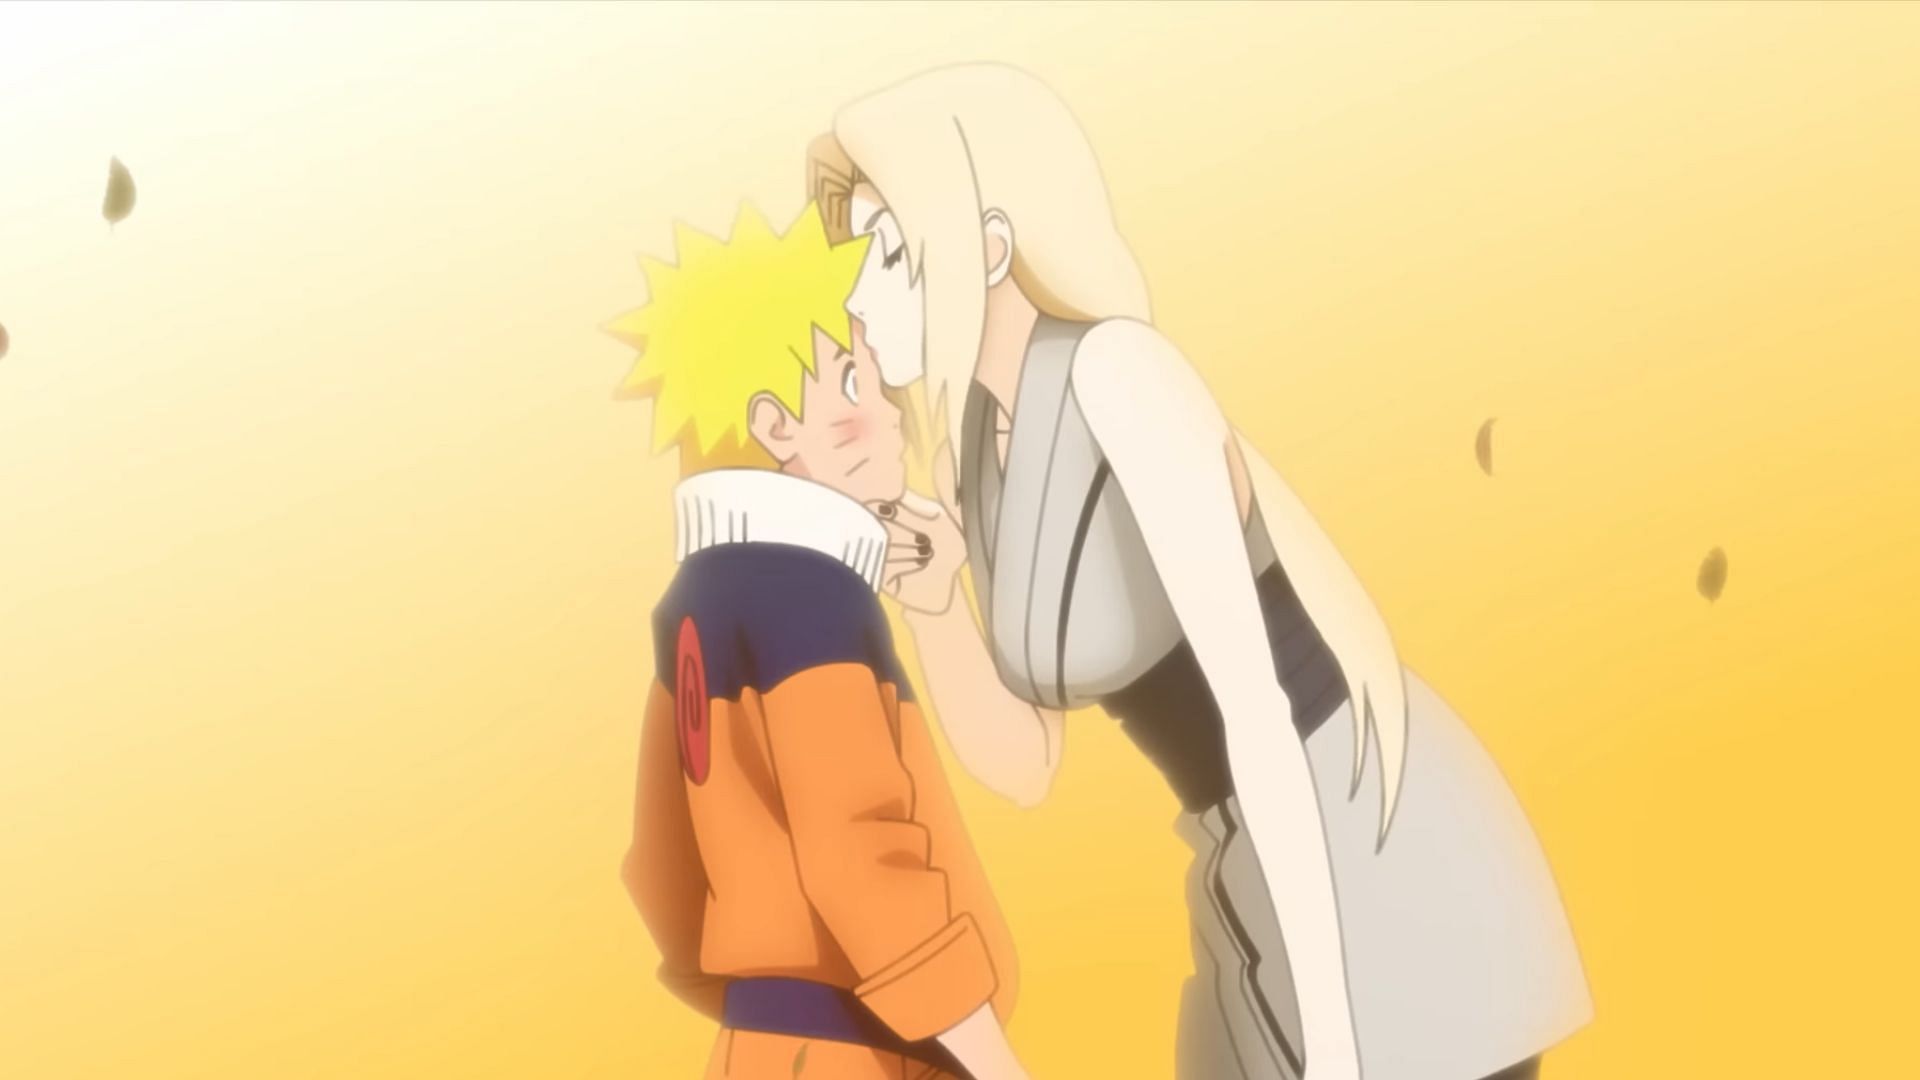 Tsunade and Naruto, as seen in the trailer (Image via Studio Pierrot)